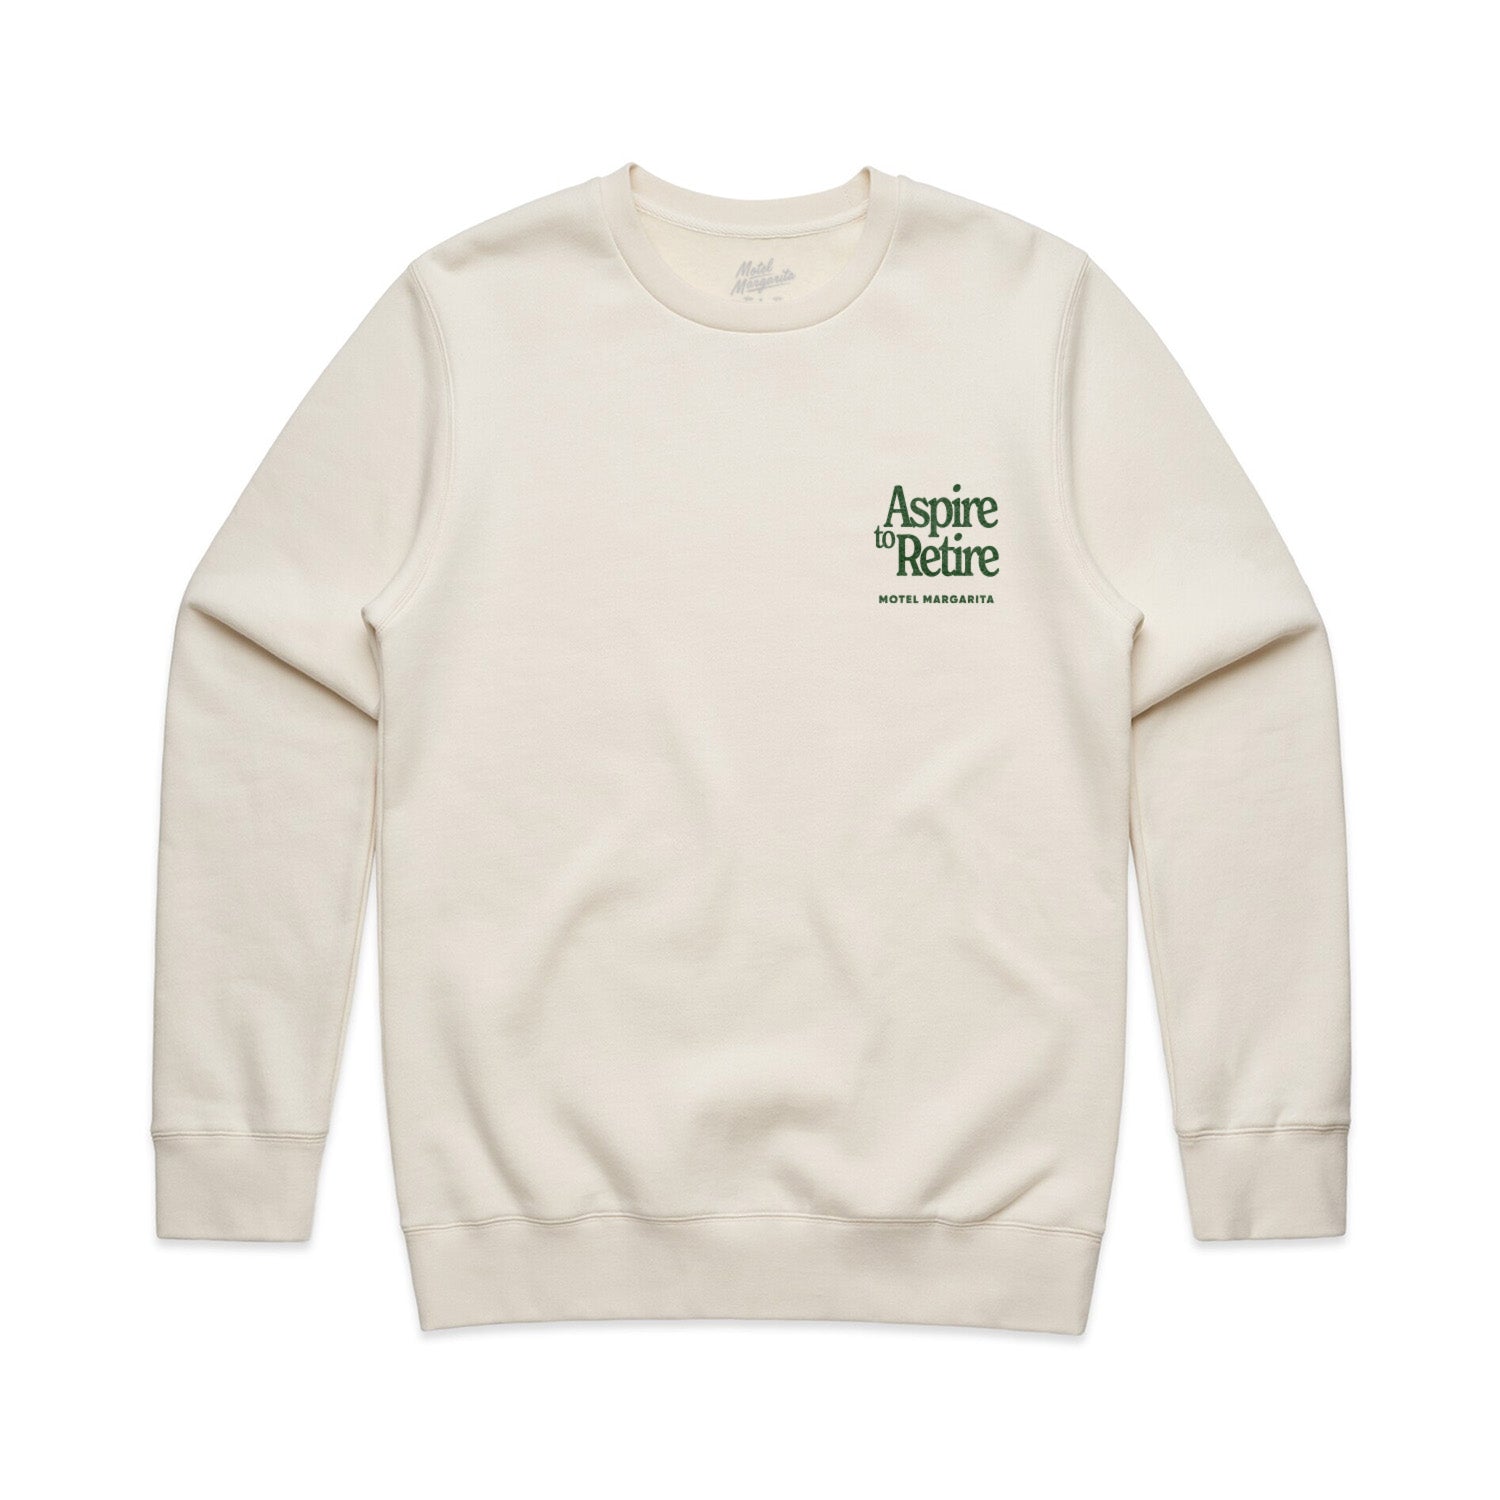 Aspire to Retire - Crewneck Sweater Bone